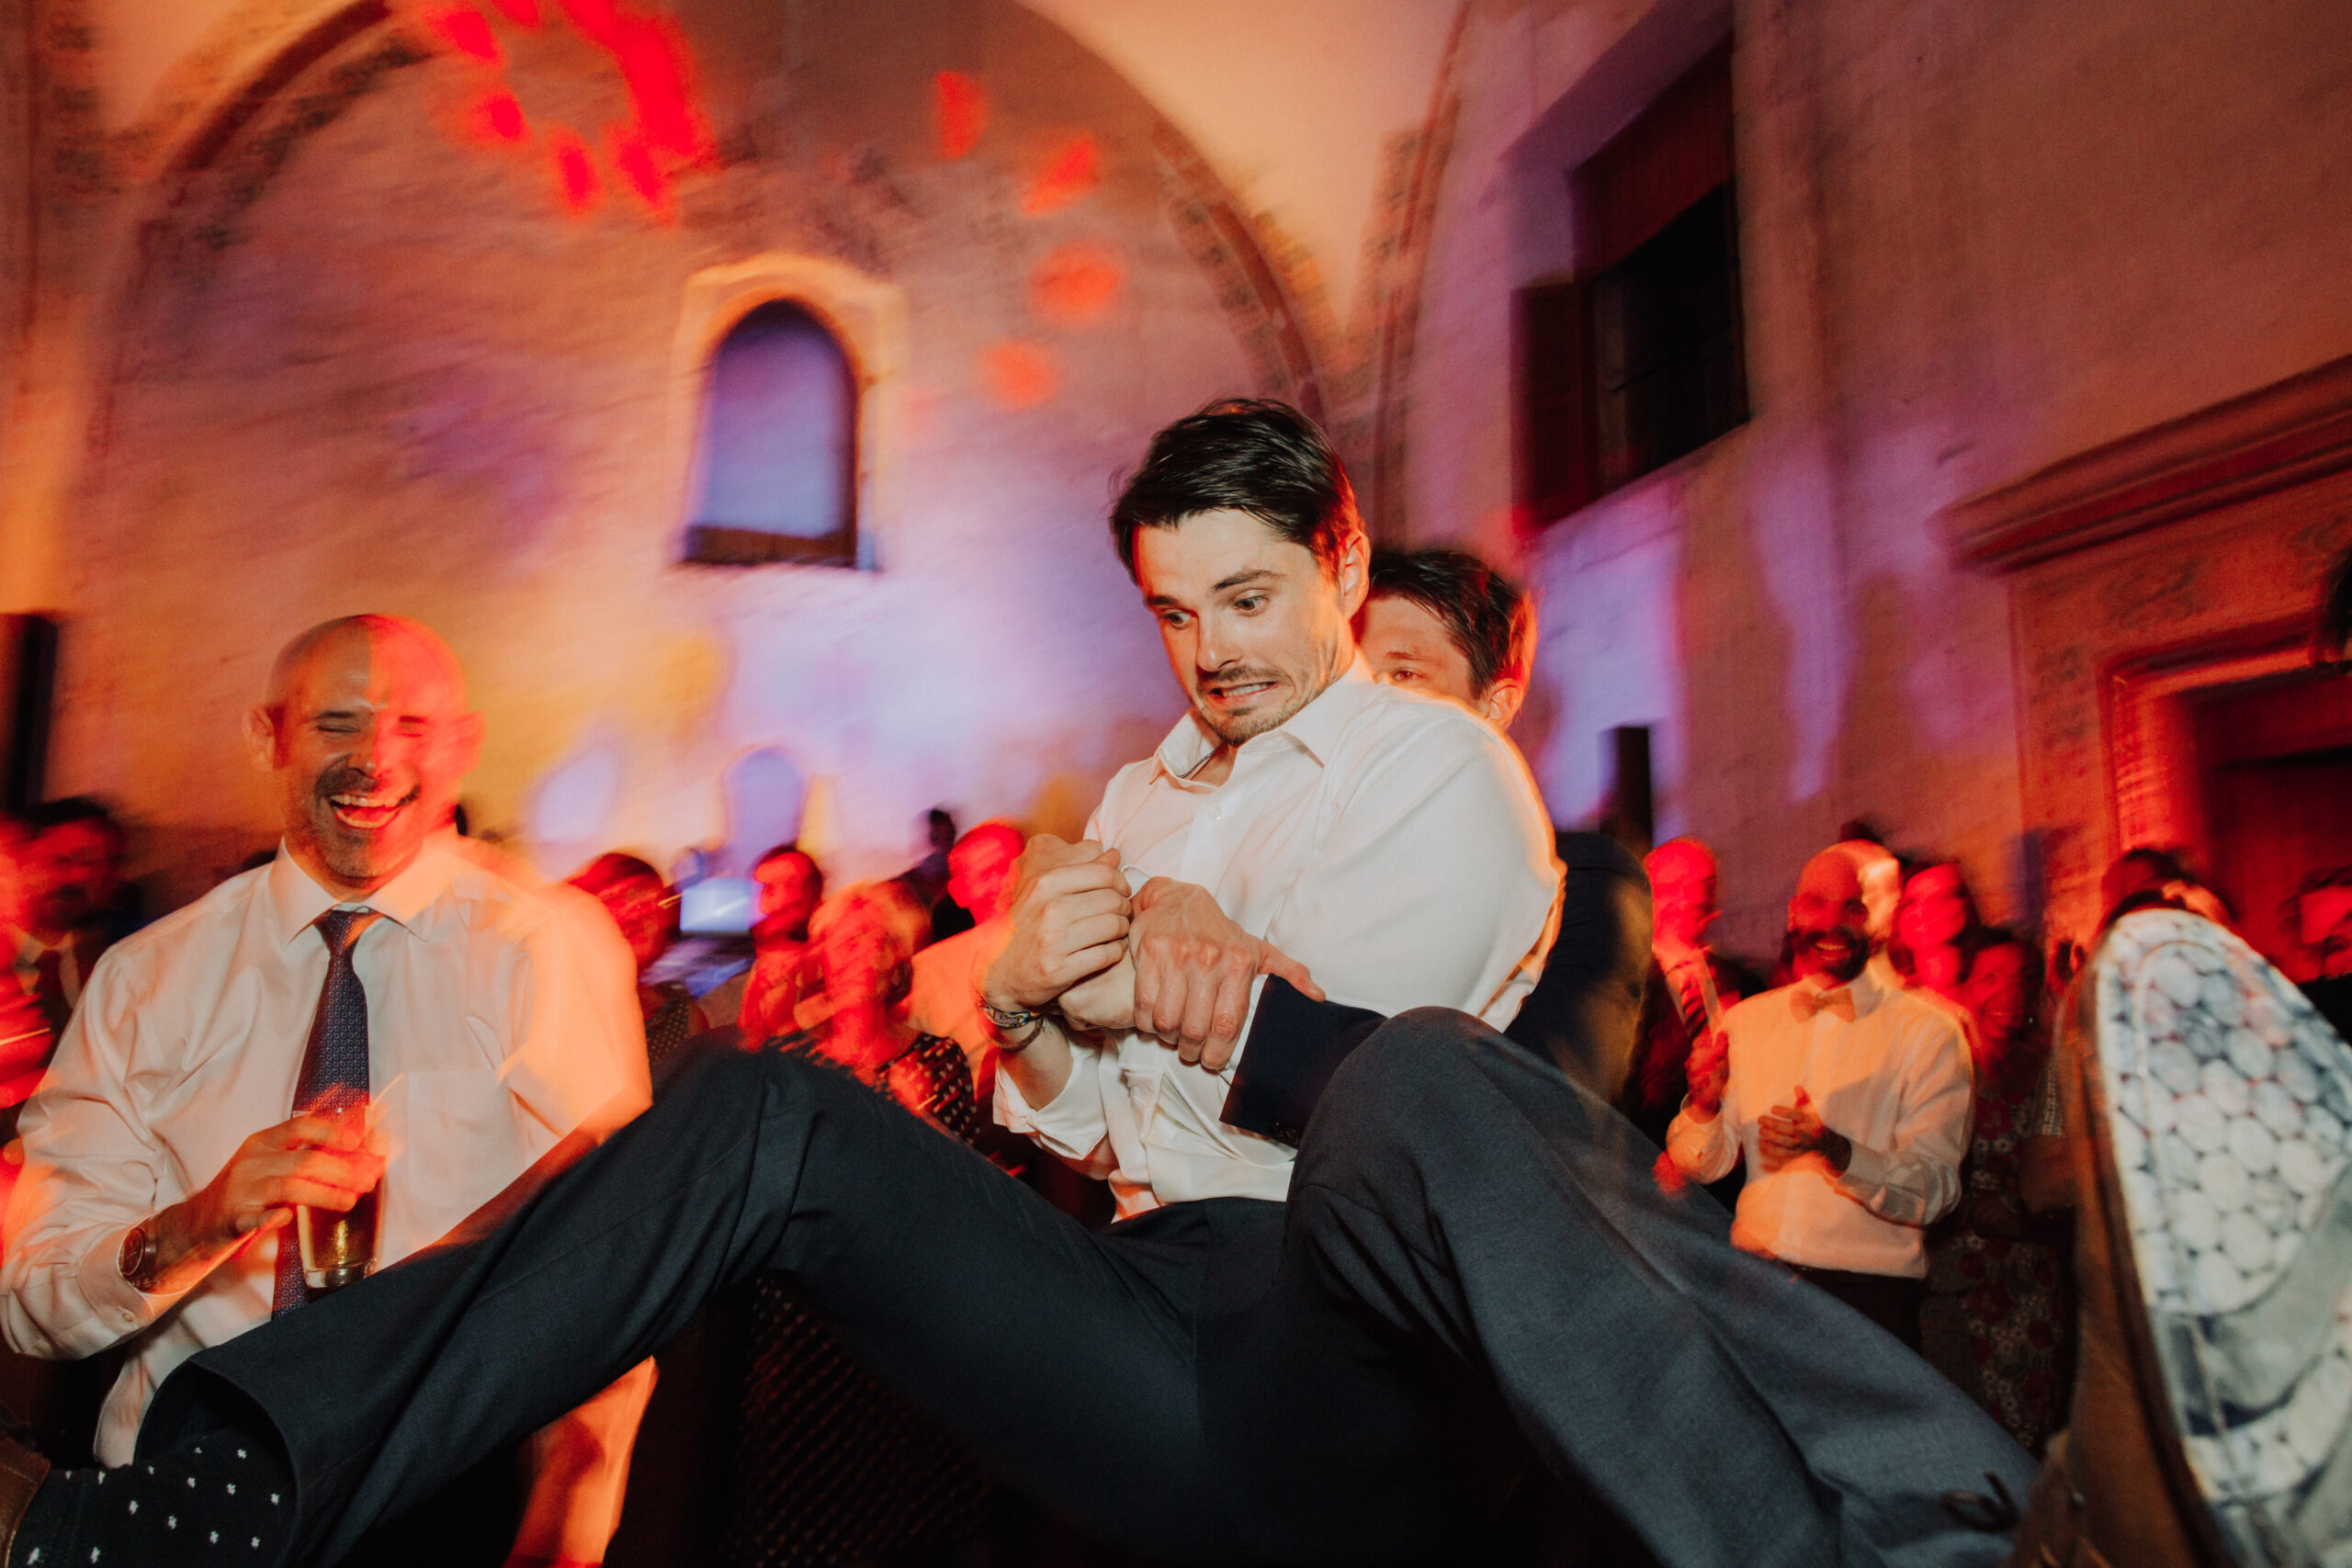 wedding guests dance the night away at the dreamy Oaxaca wedding reception